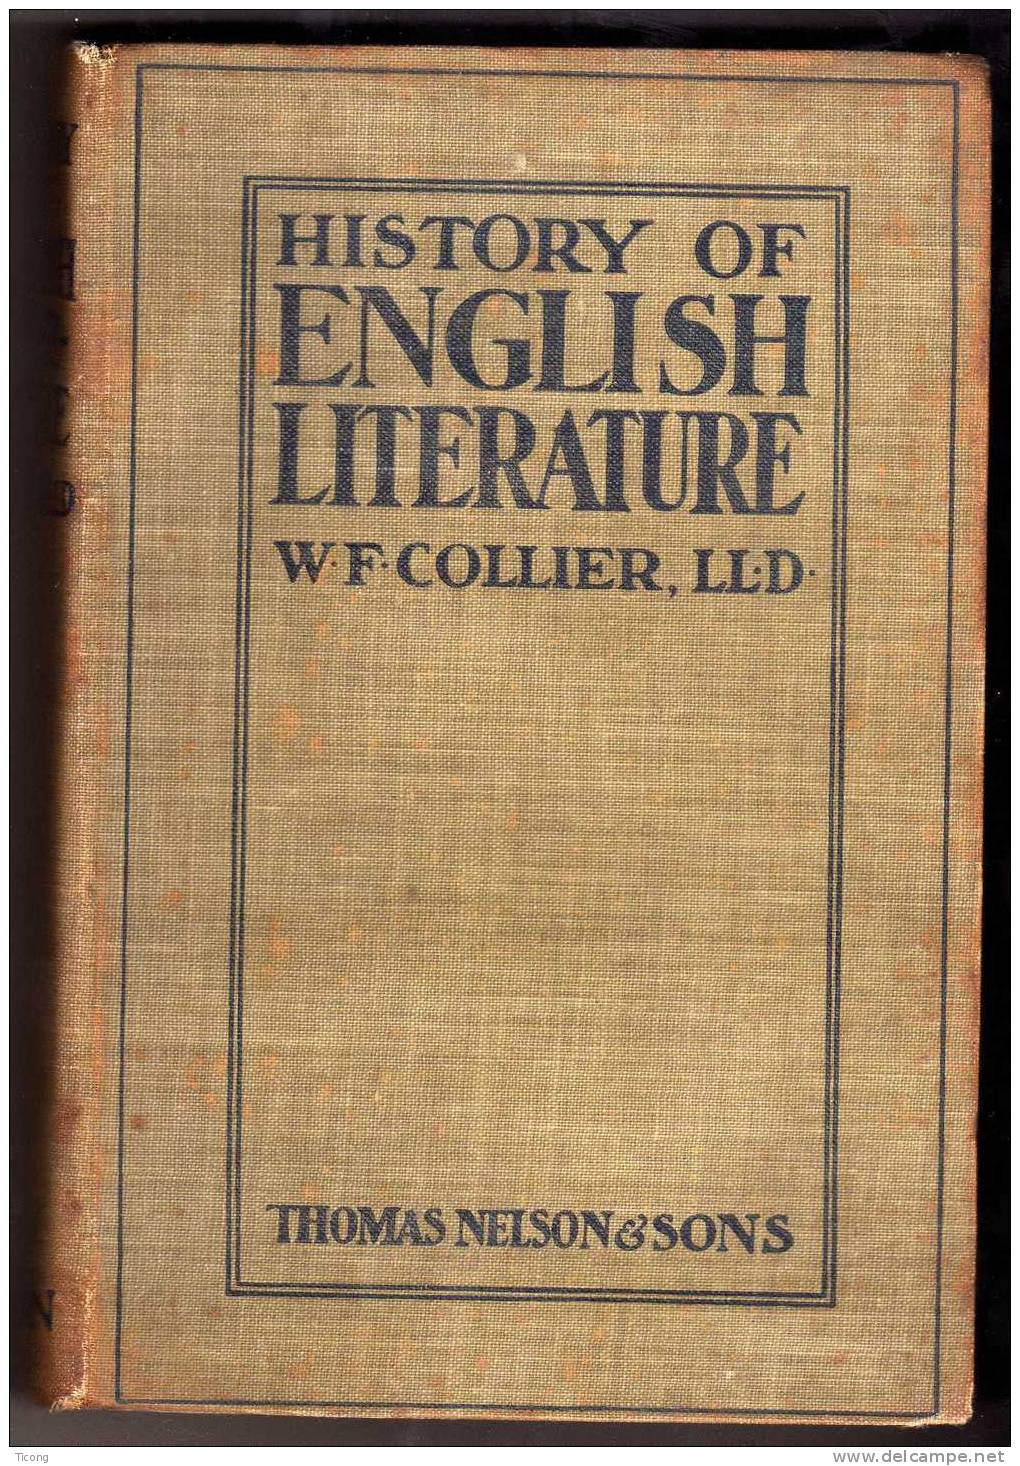 HISTORY OF ENGLISH LITERATURE - W F COLLIER LL D- THOMAS NELSON SONS - HISTOIRE DE LA LITTERATURE ANGLAISE 1912 - Anthologien